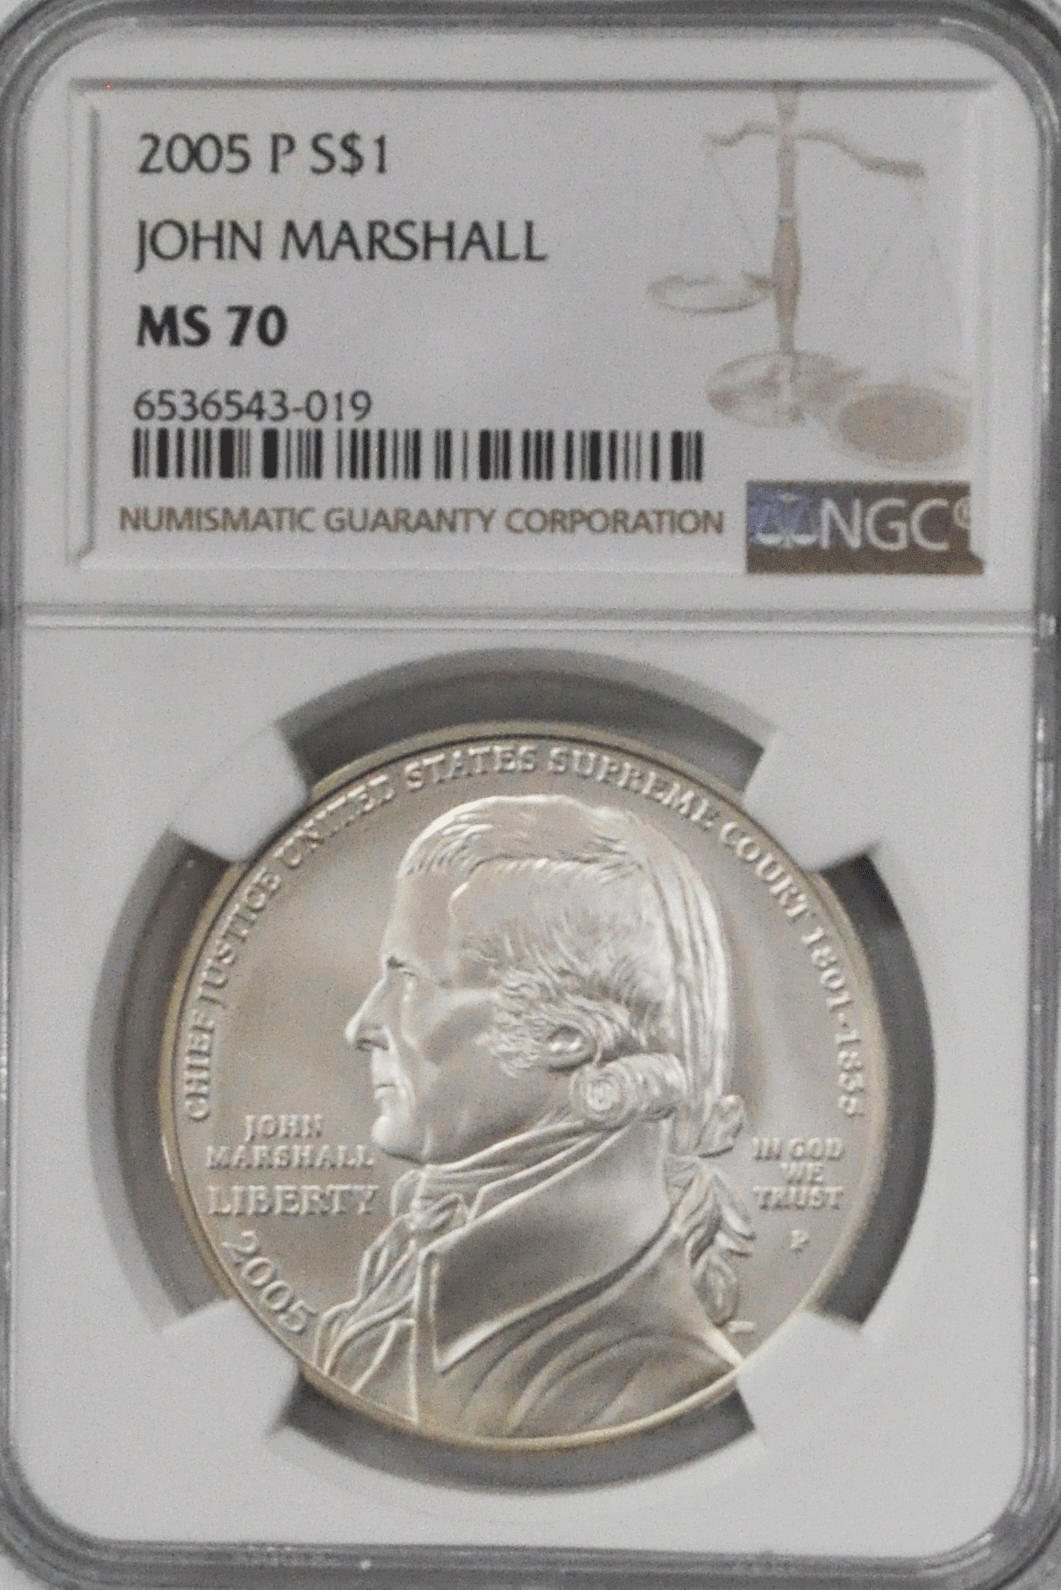 2005 P $1 John Marshall Commemorative Silver Dollar MS70 NGC